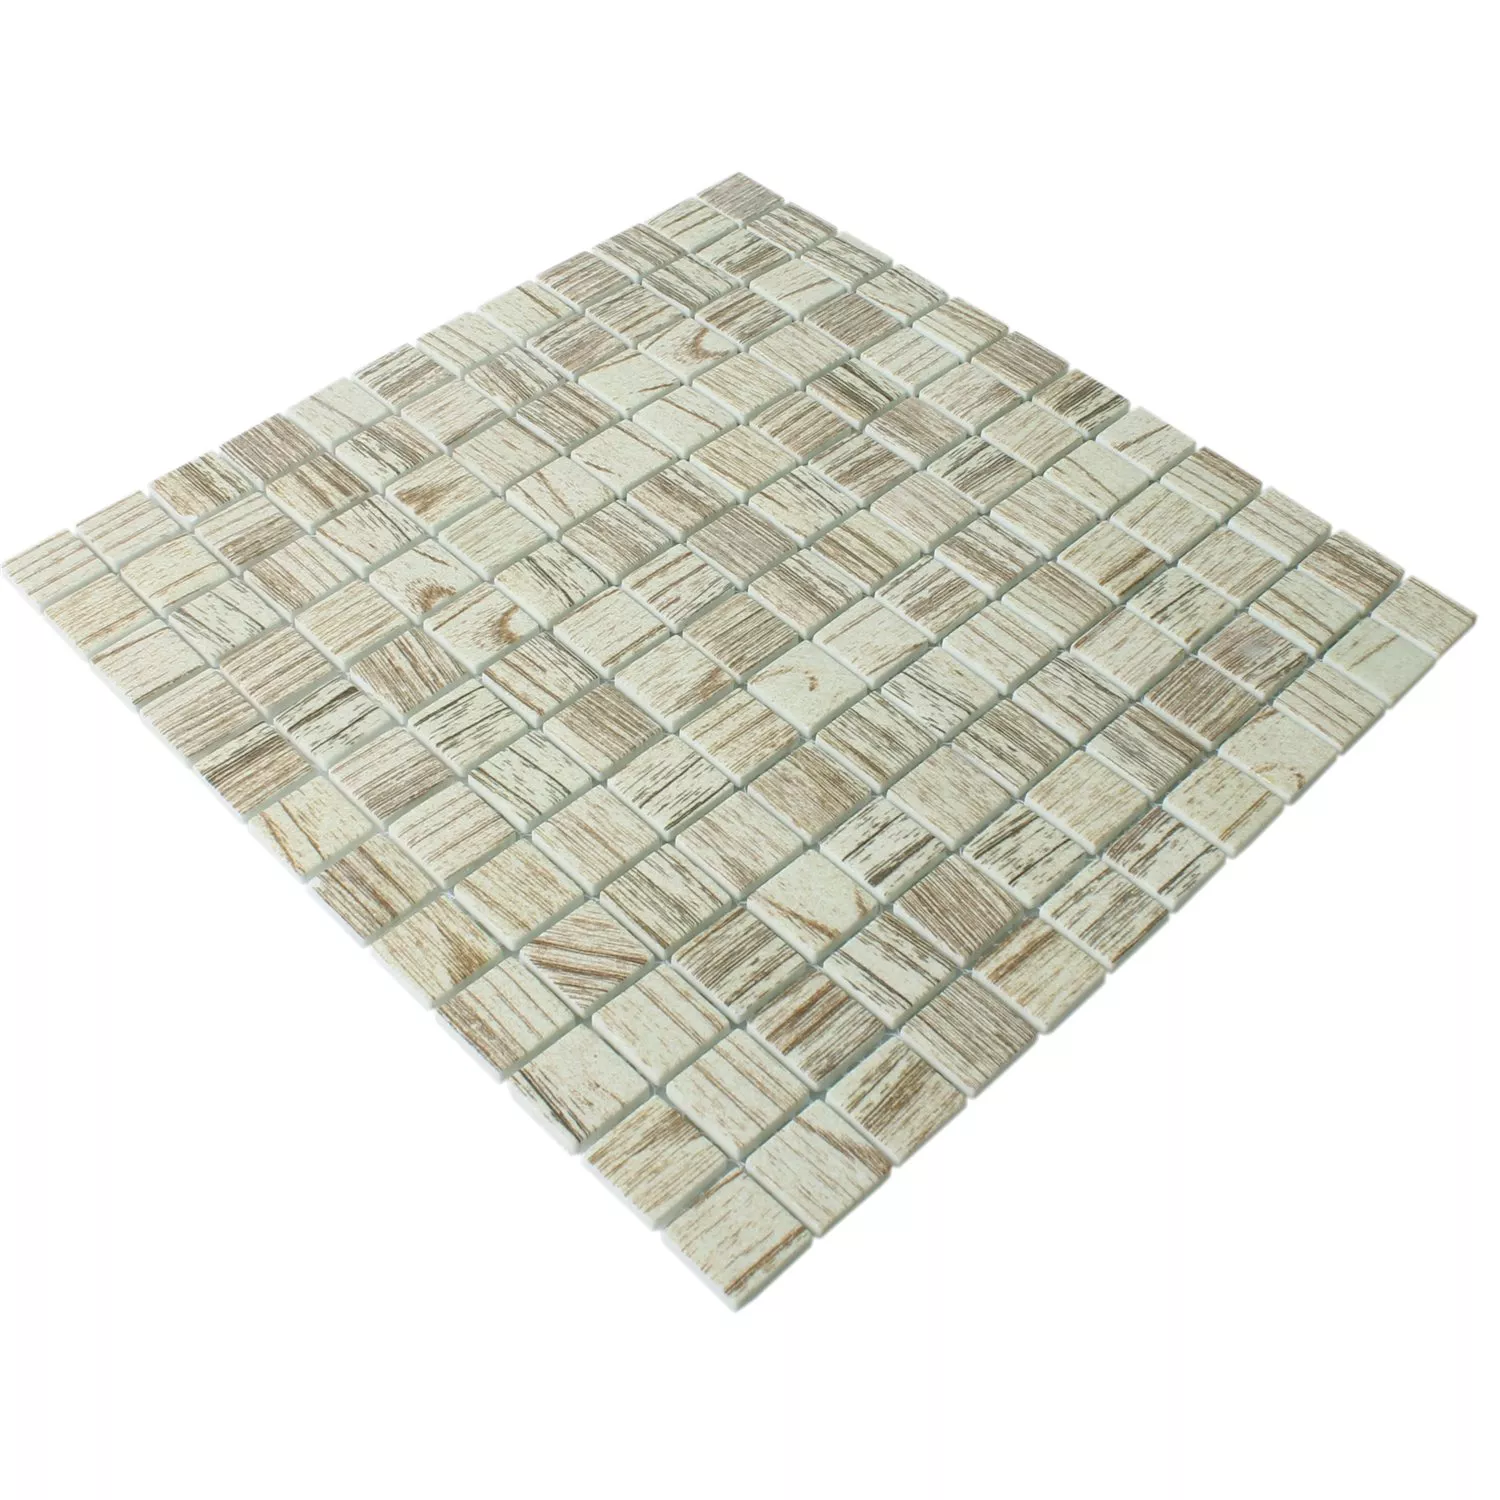 Sample Mosaic Tiles Glass Valetta Wood Structure Light Beige